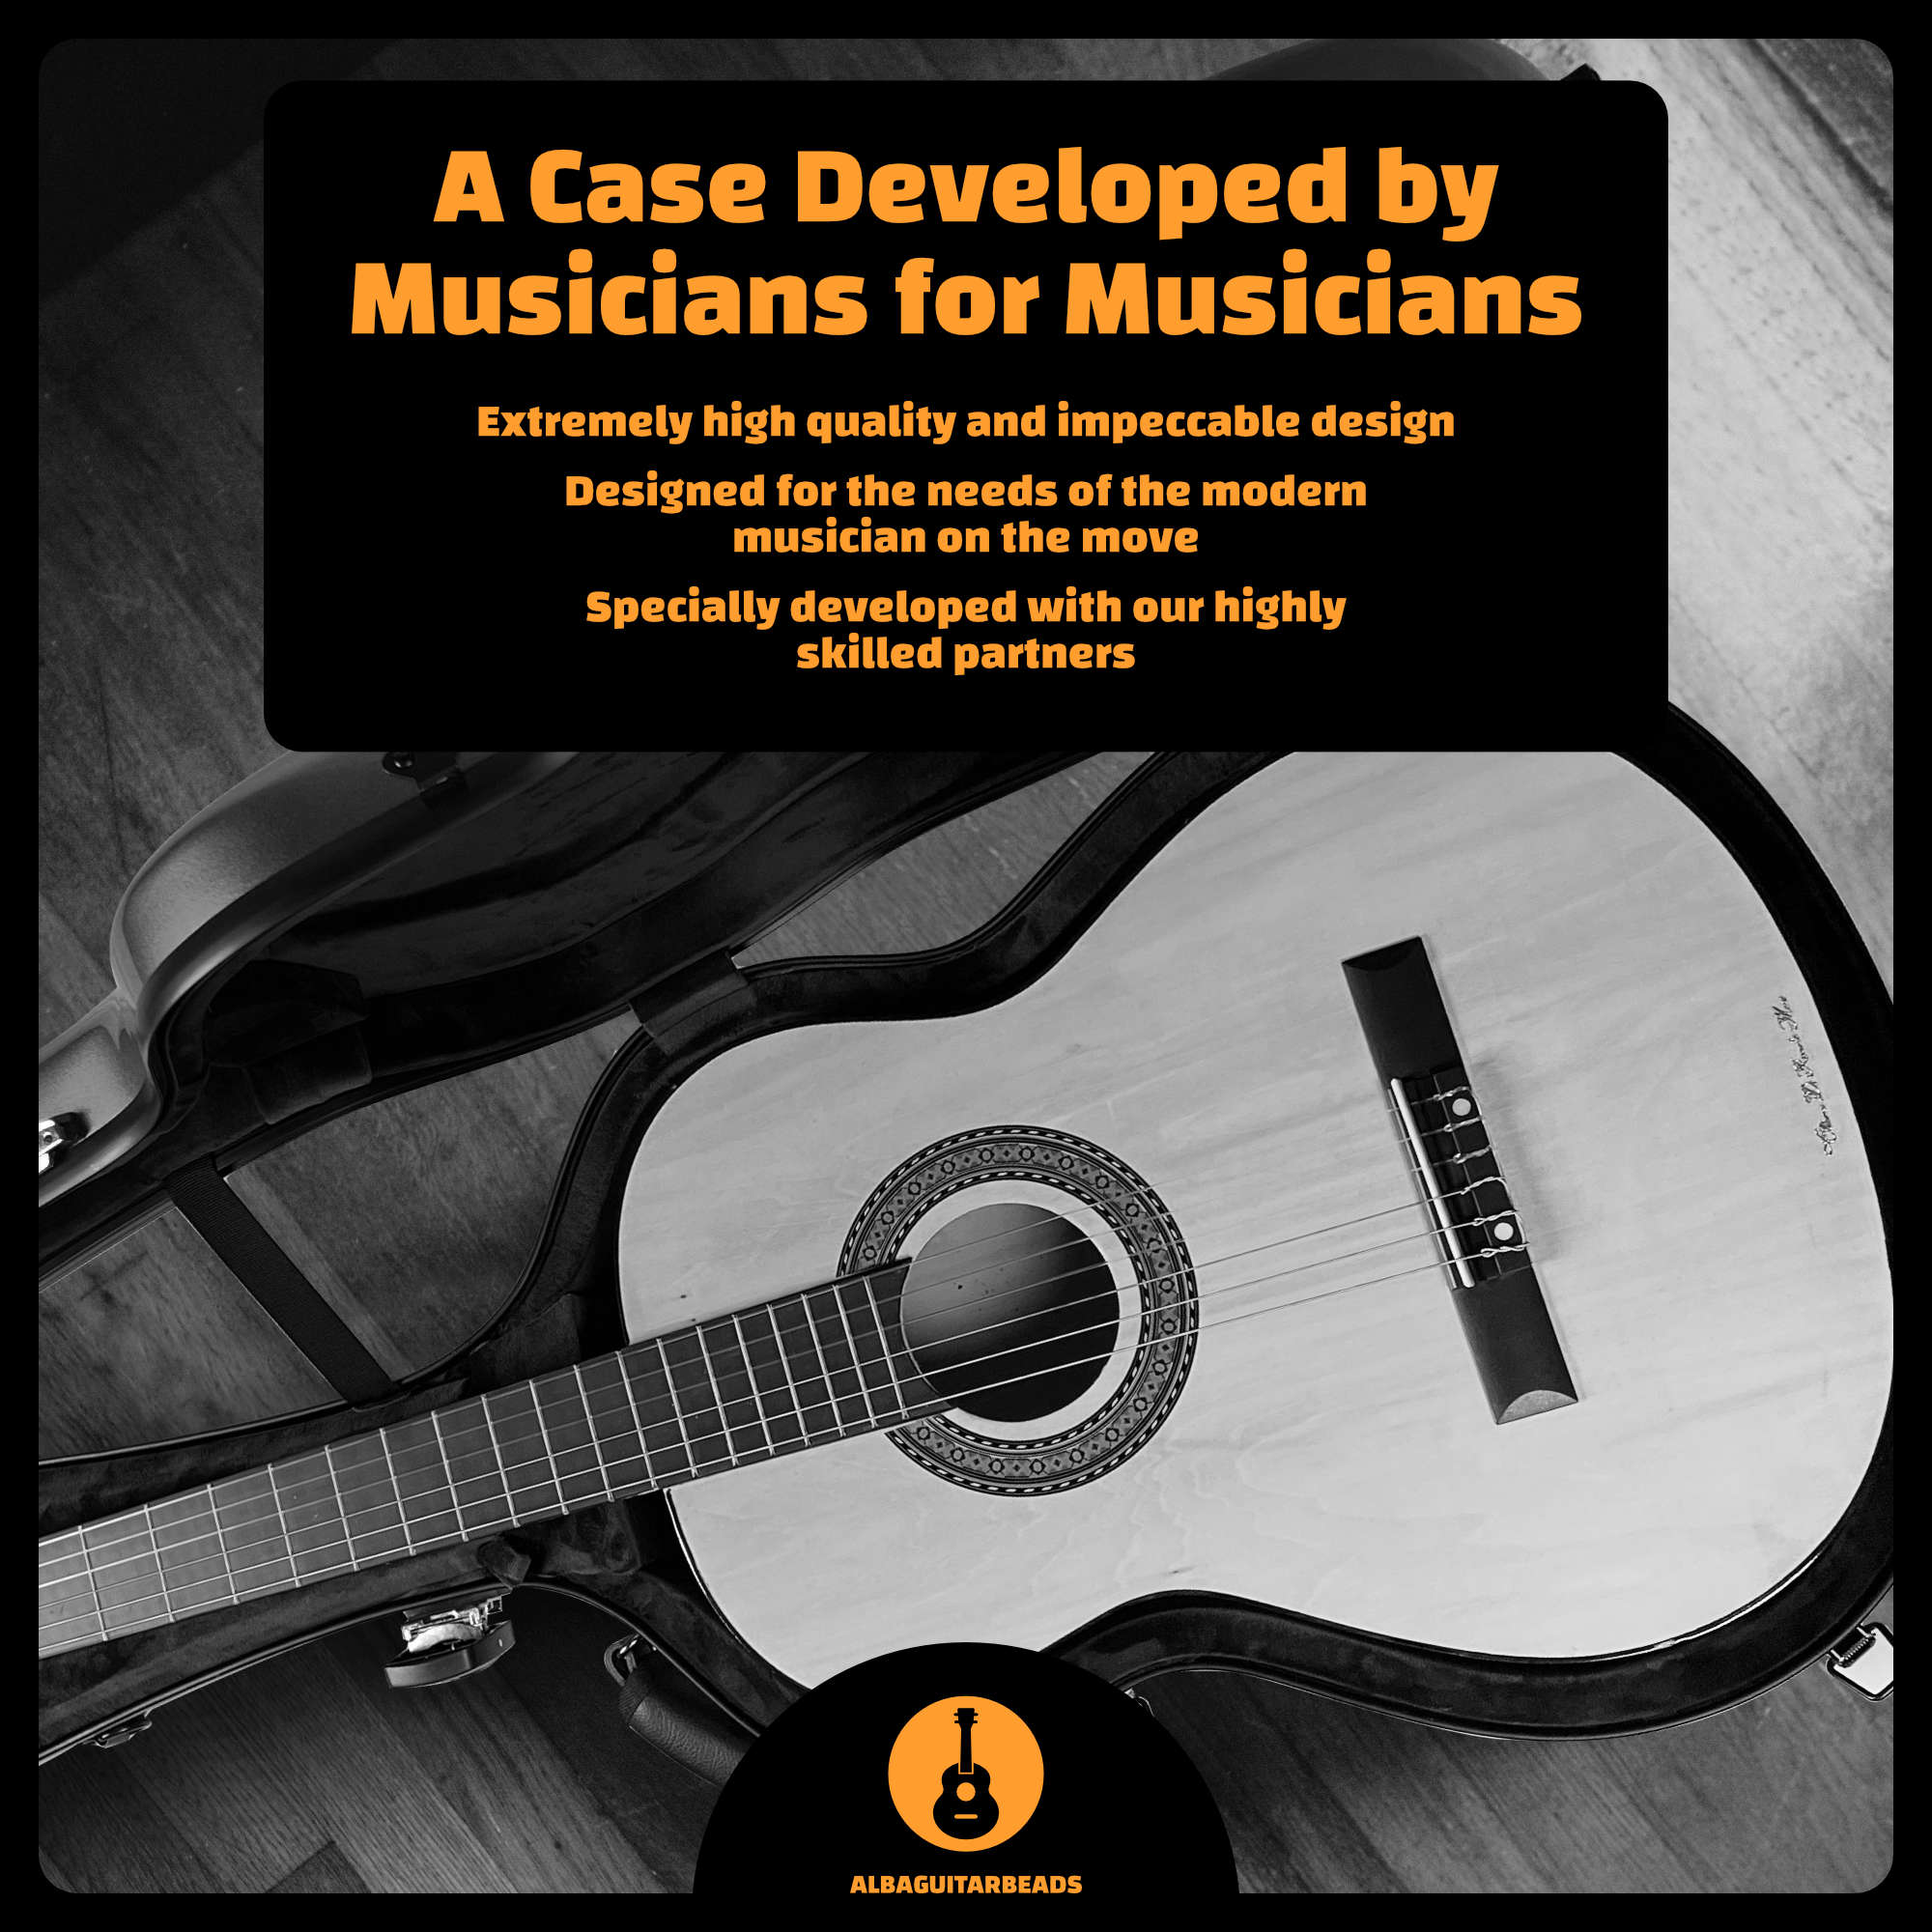 Carbon Alba Guitar Case Blue Matte for Classical Guitar Acoustic, Flamenco guitar case